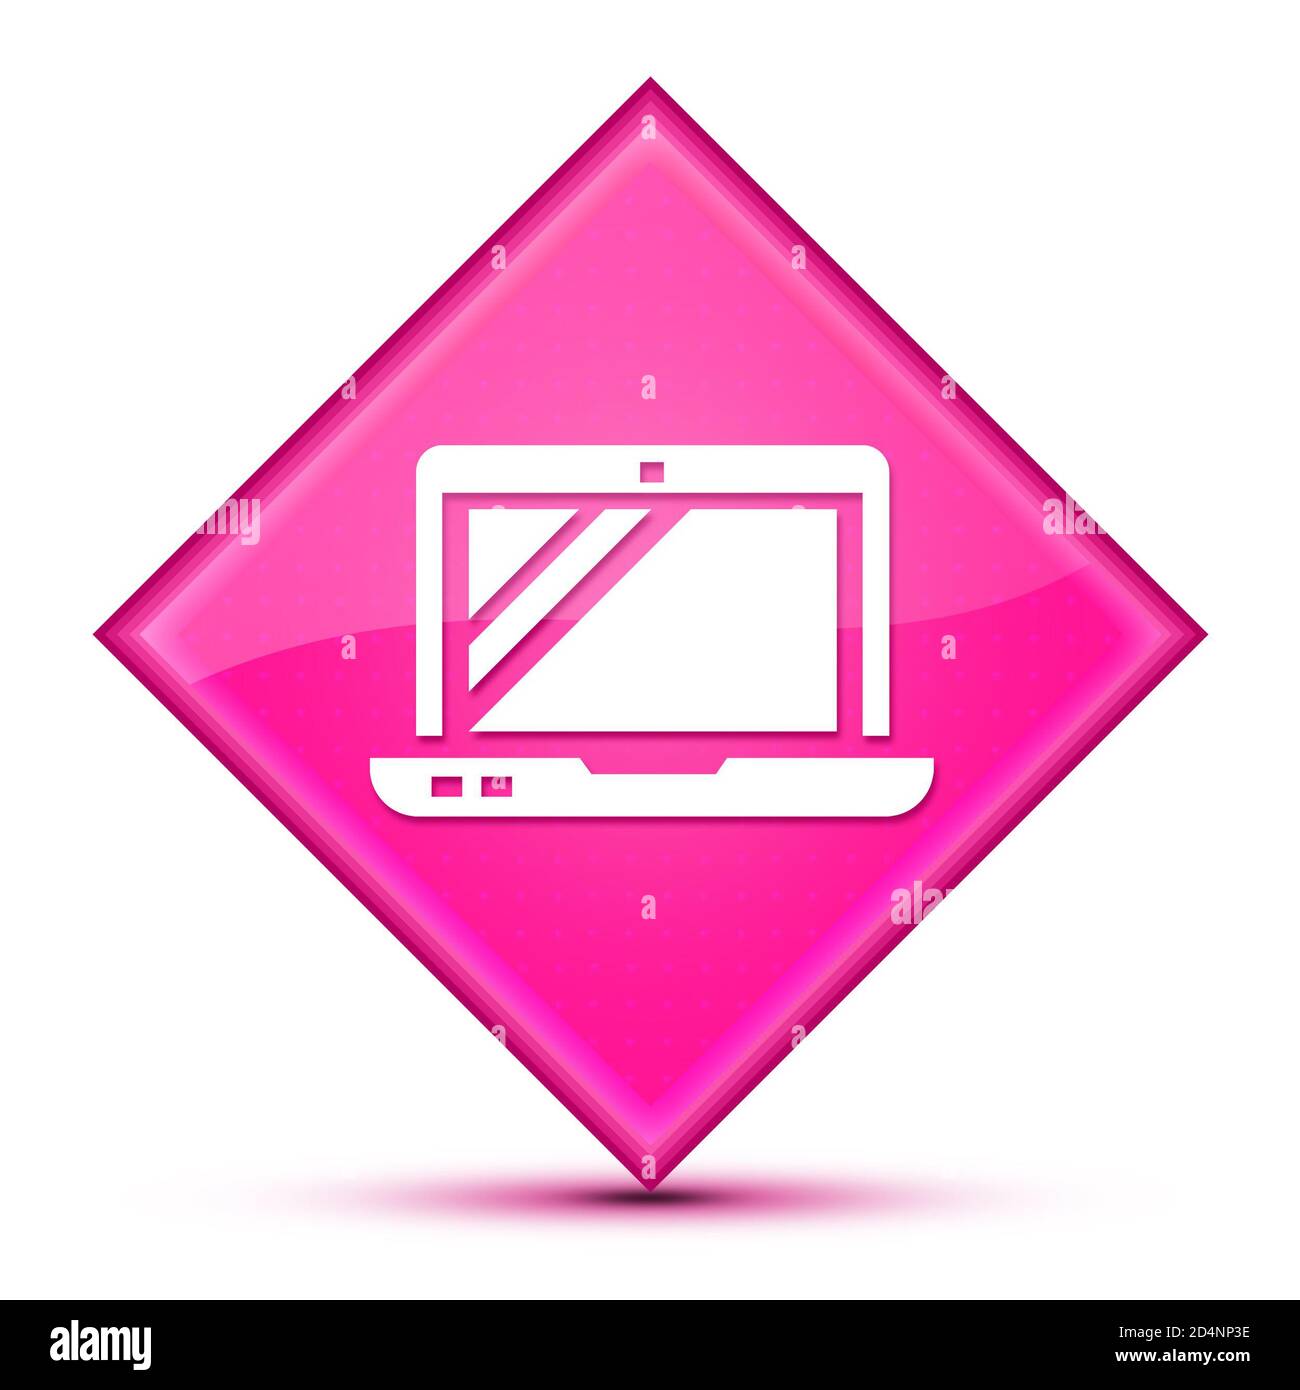 Technical skill icon isolated on luxurious wavy pink diamond button abstract illustration Stock Photo